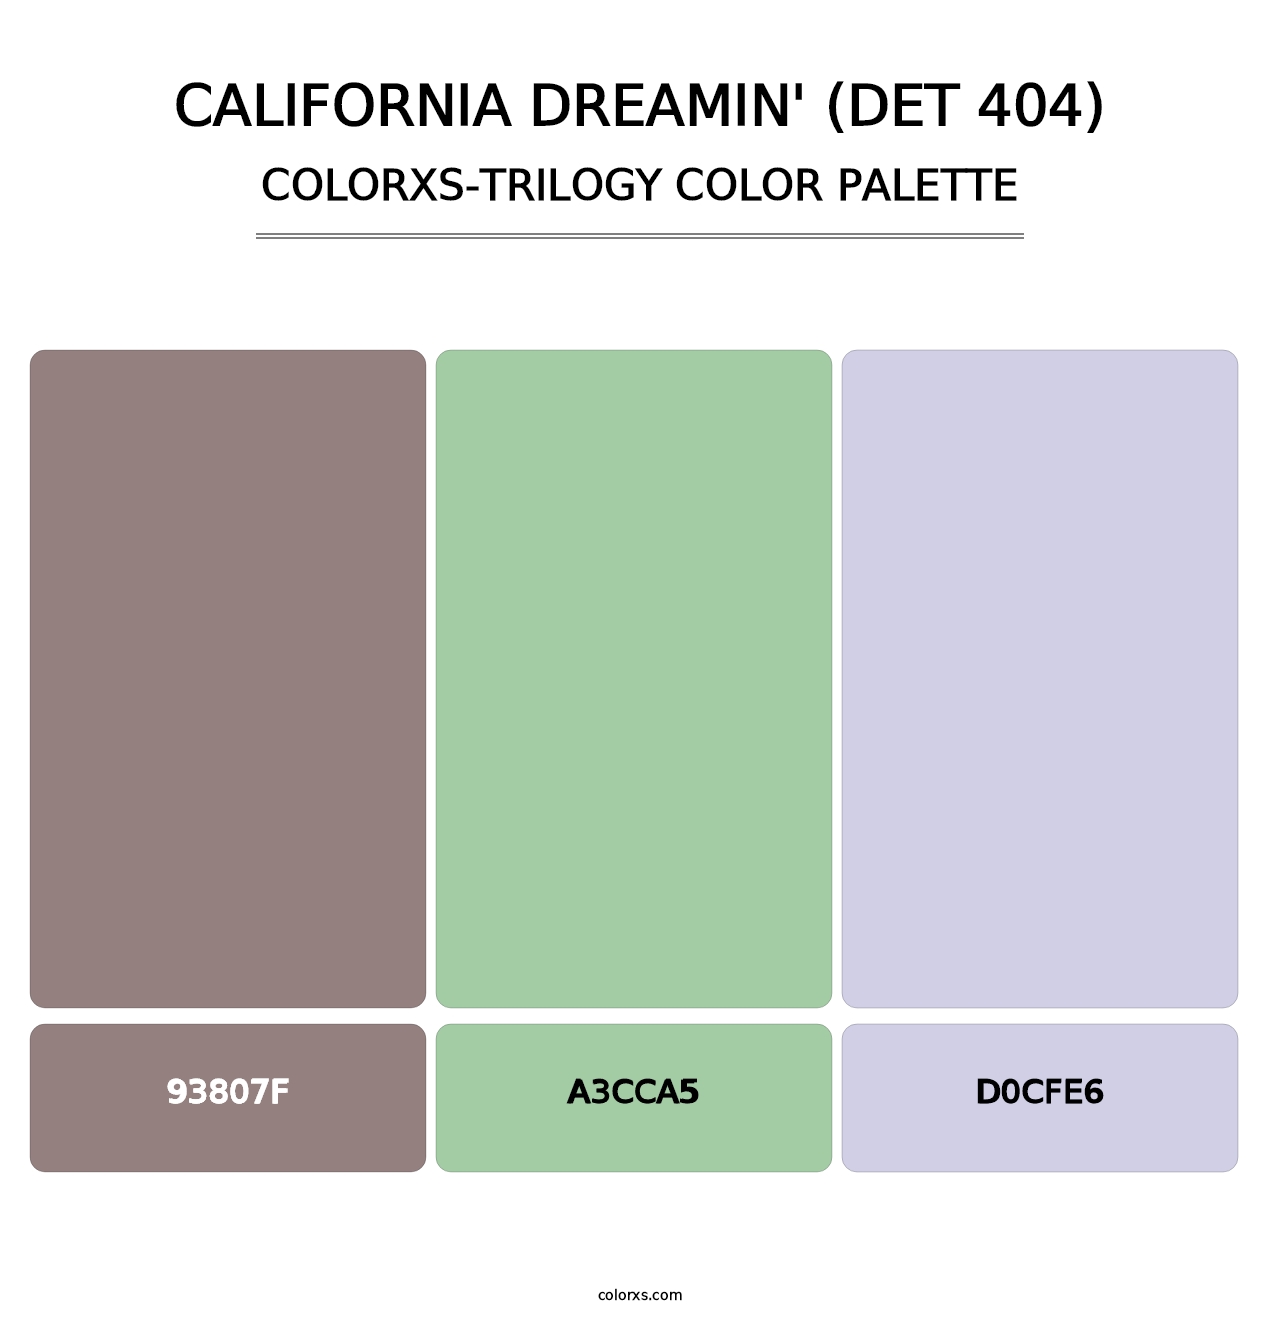 California Dreamin' (DET 404) - Colorxs Trilogy Palette